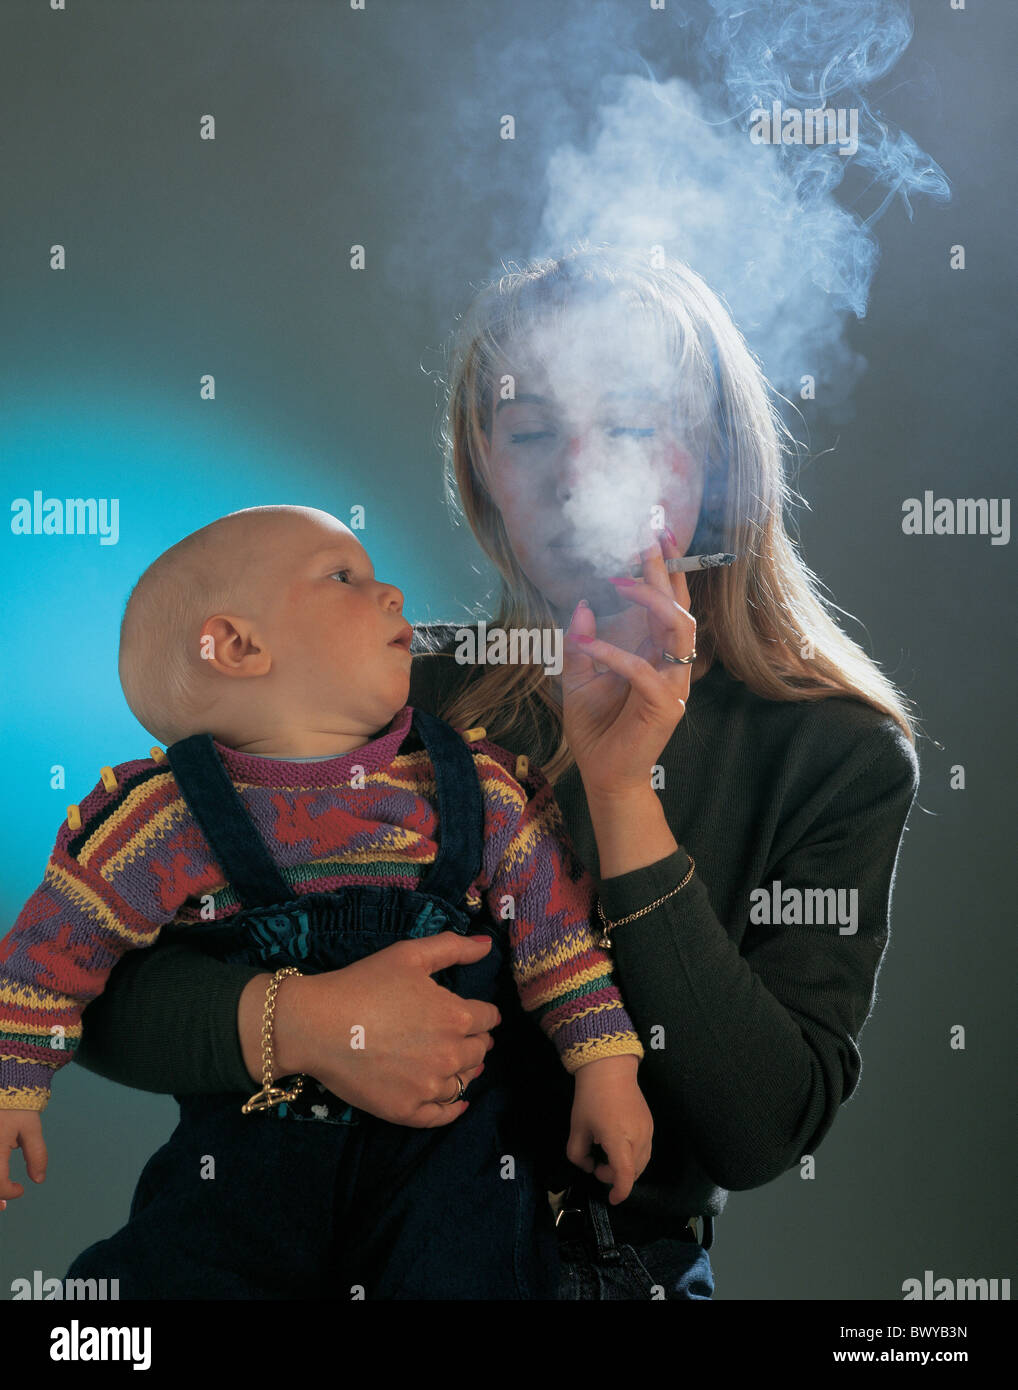 baby bad model child dangerous dense smoke health injurious mother negative problem problematical responsi Stock Photo